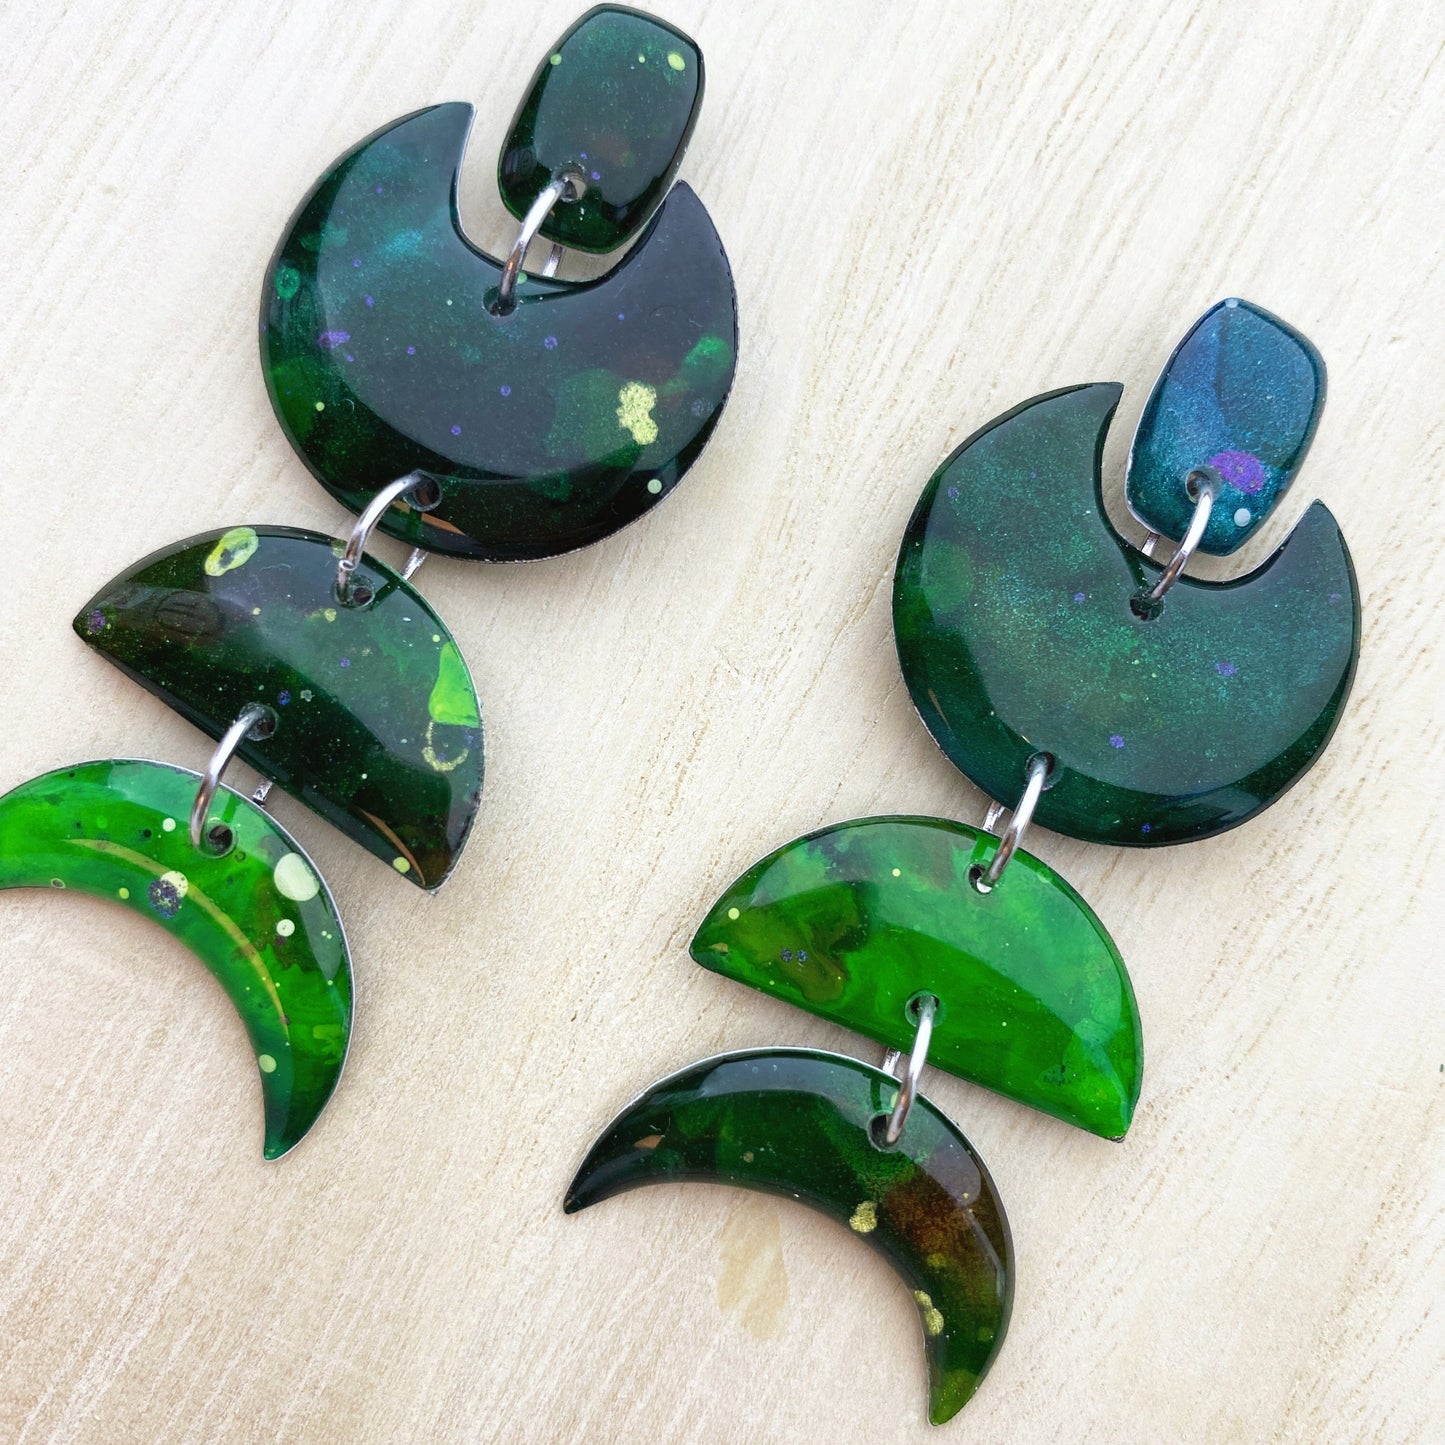 Lacroz Creations Earrings Galaxy | Emerald Green Moon Phase Dangle